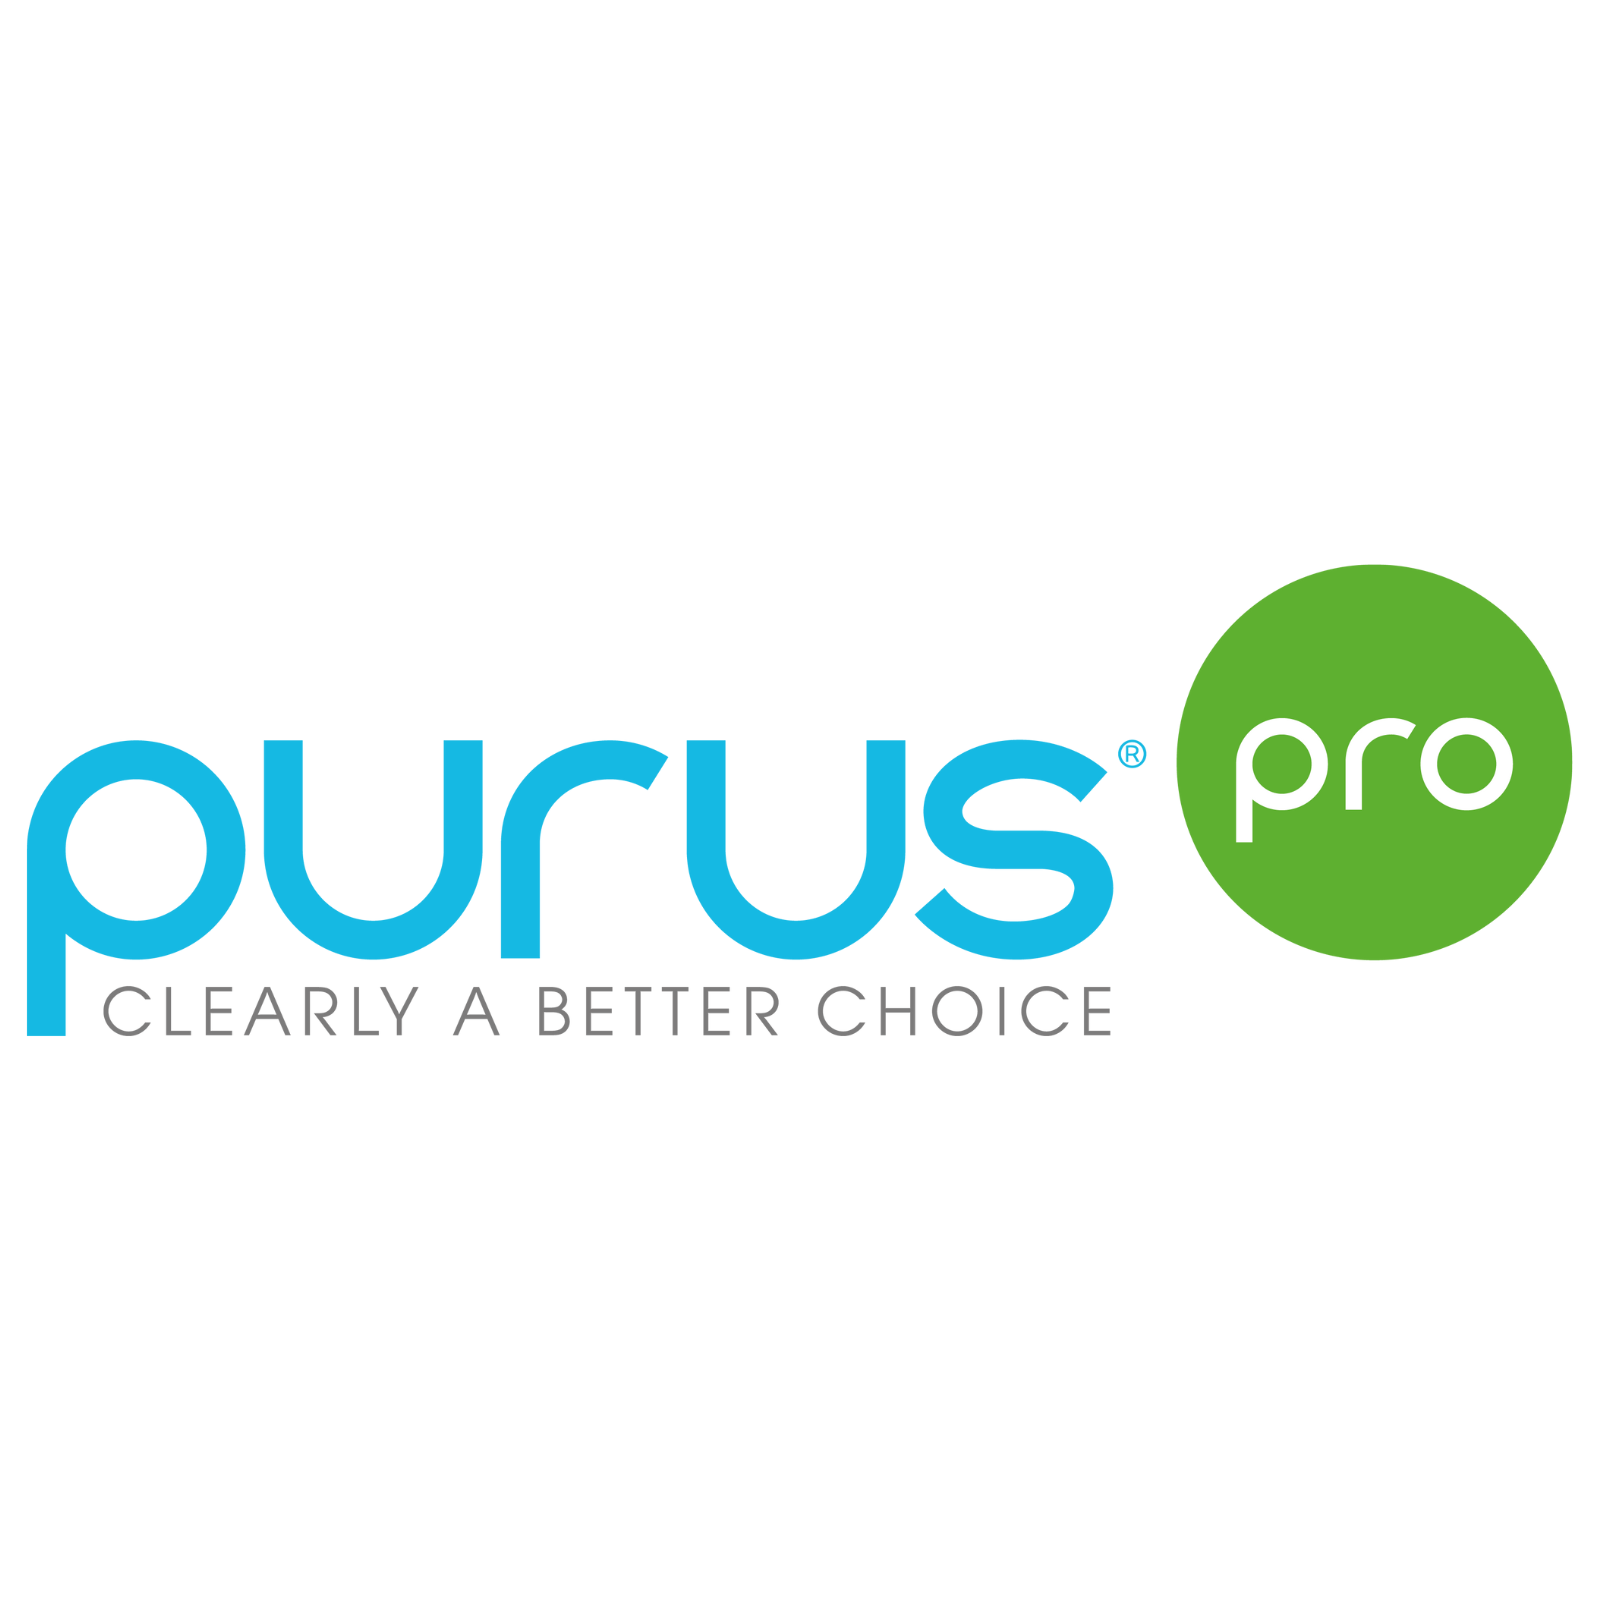 Purus Pro